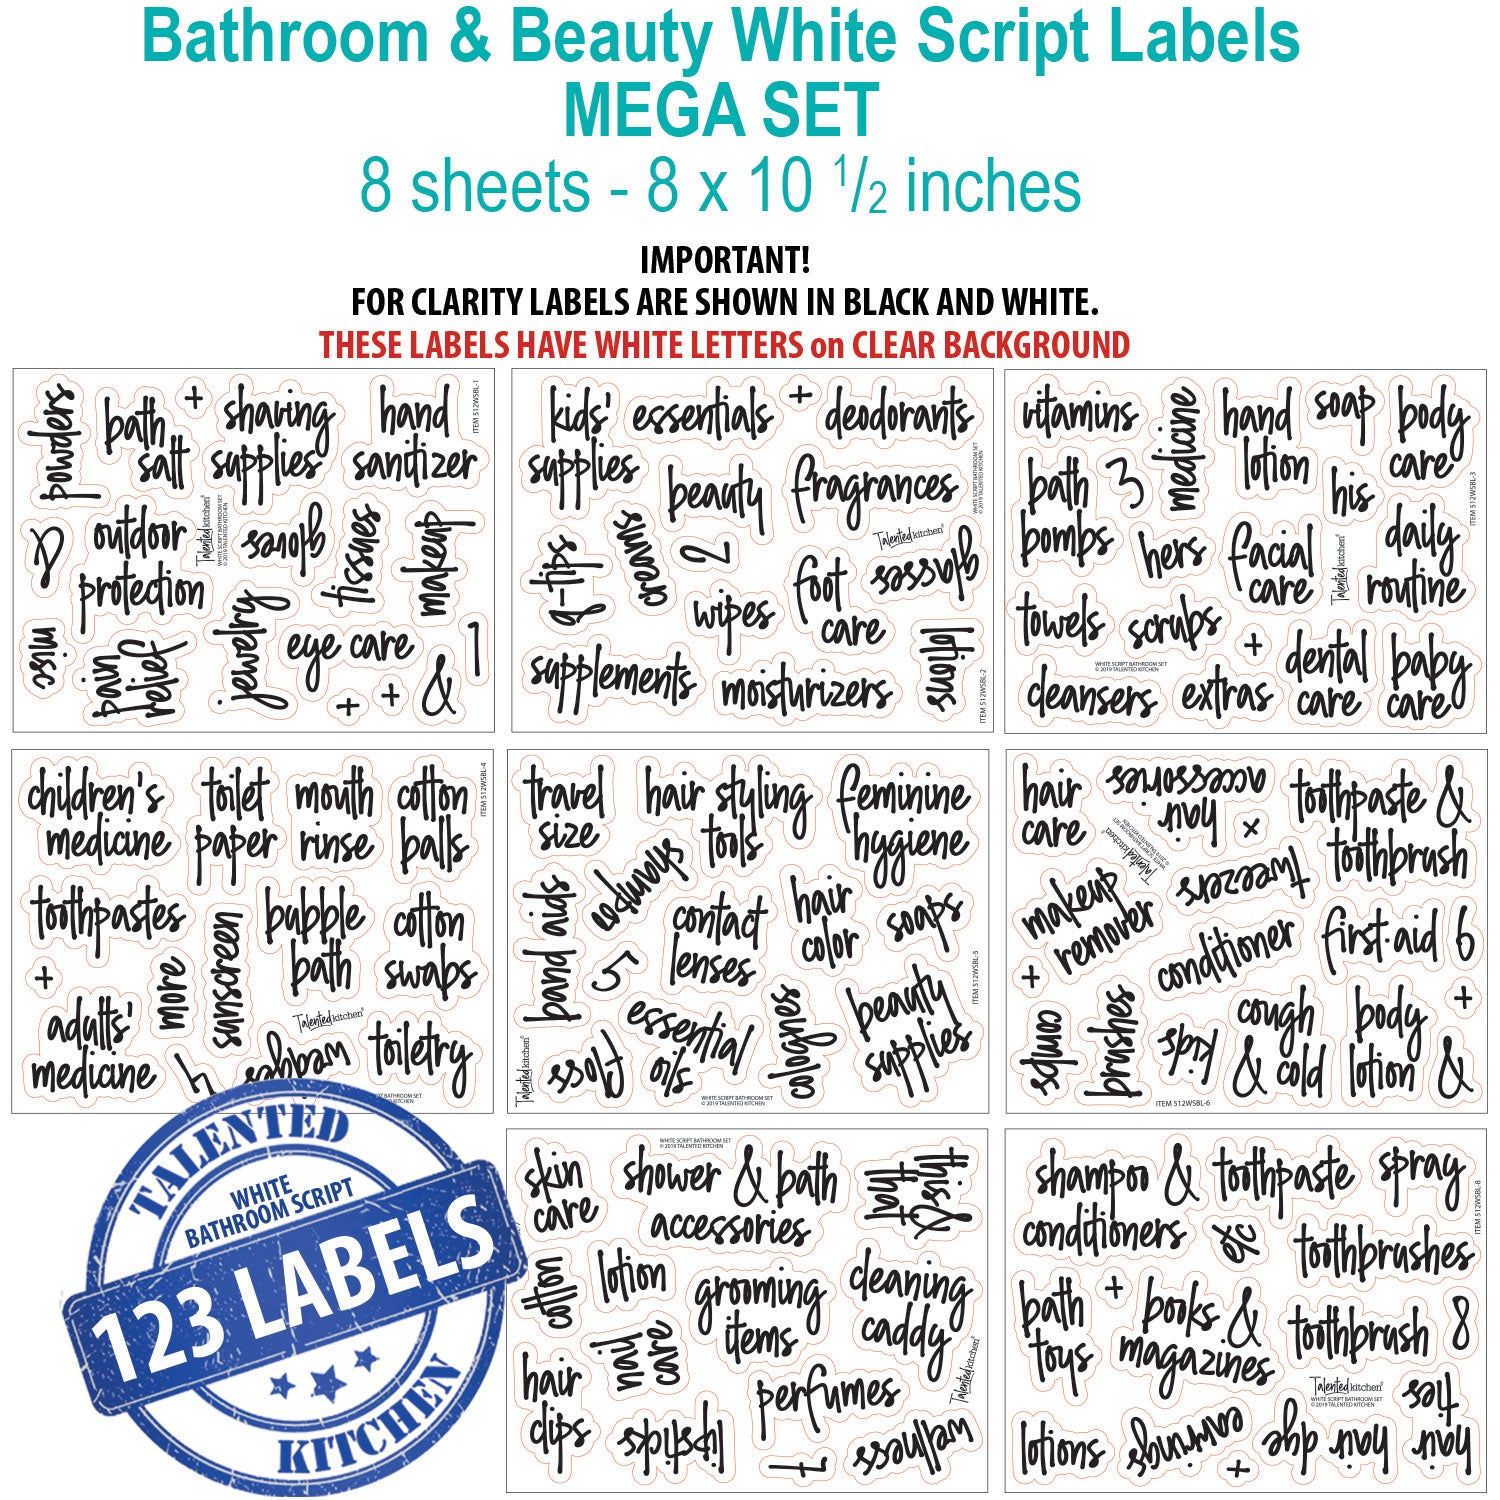 Minimalist Bathroom, Beauty & Makeup Label Set, 174 Labels